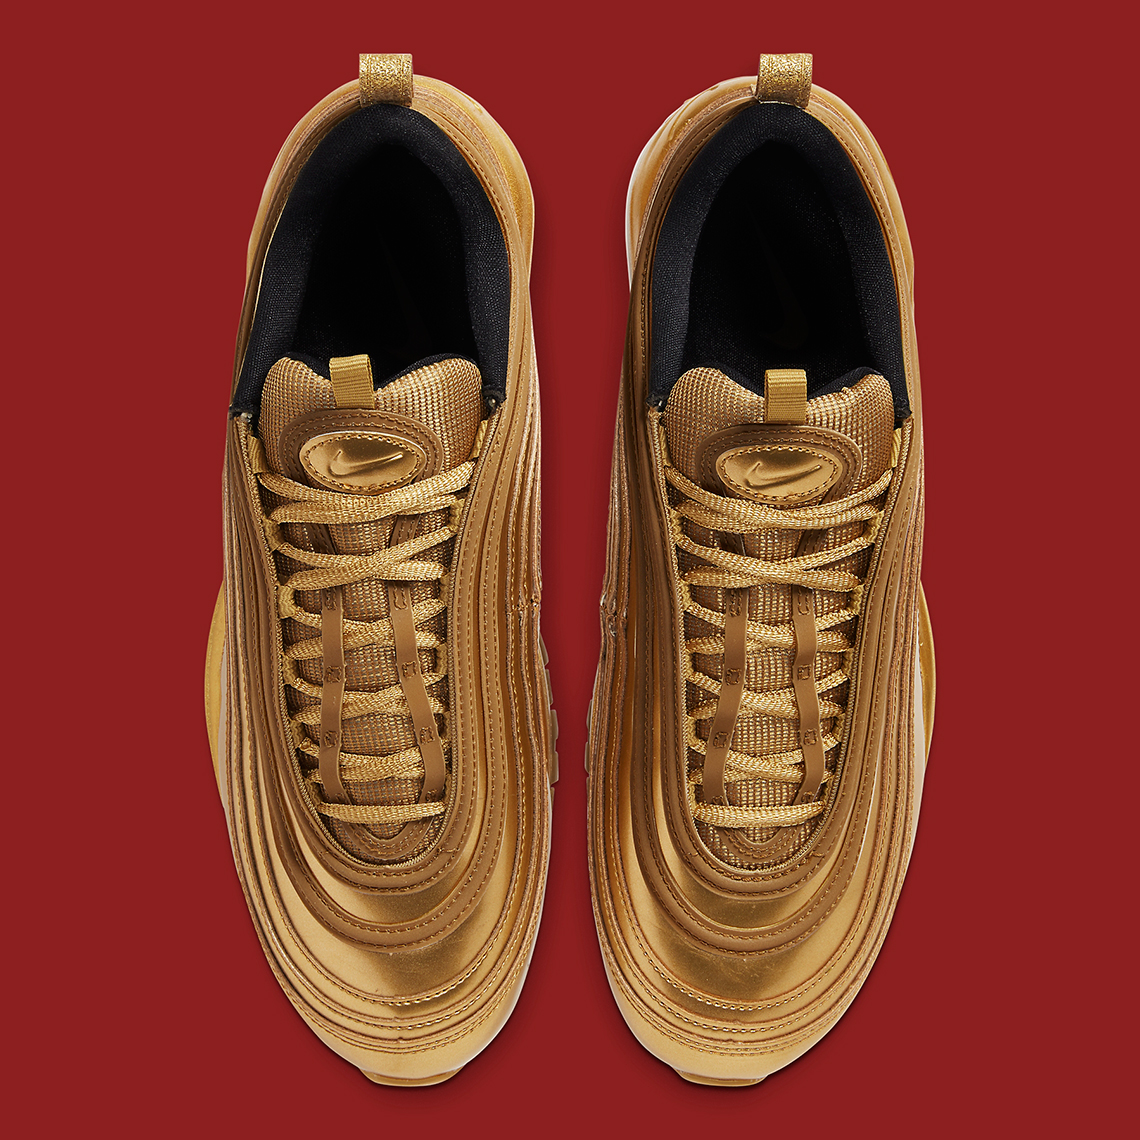 Nike Air Max 97 Metallic Gold CT4556-700